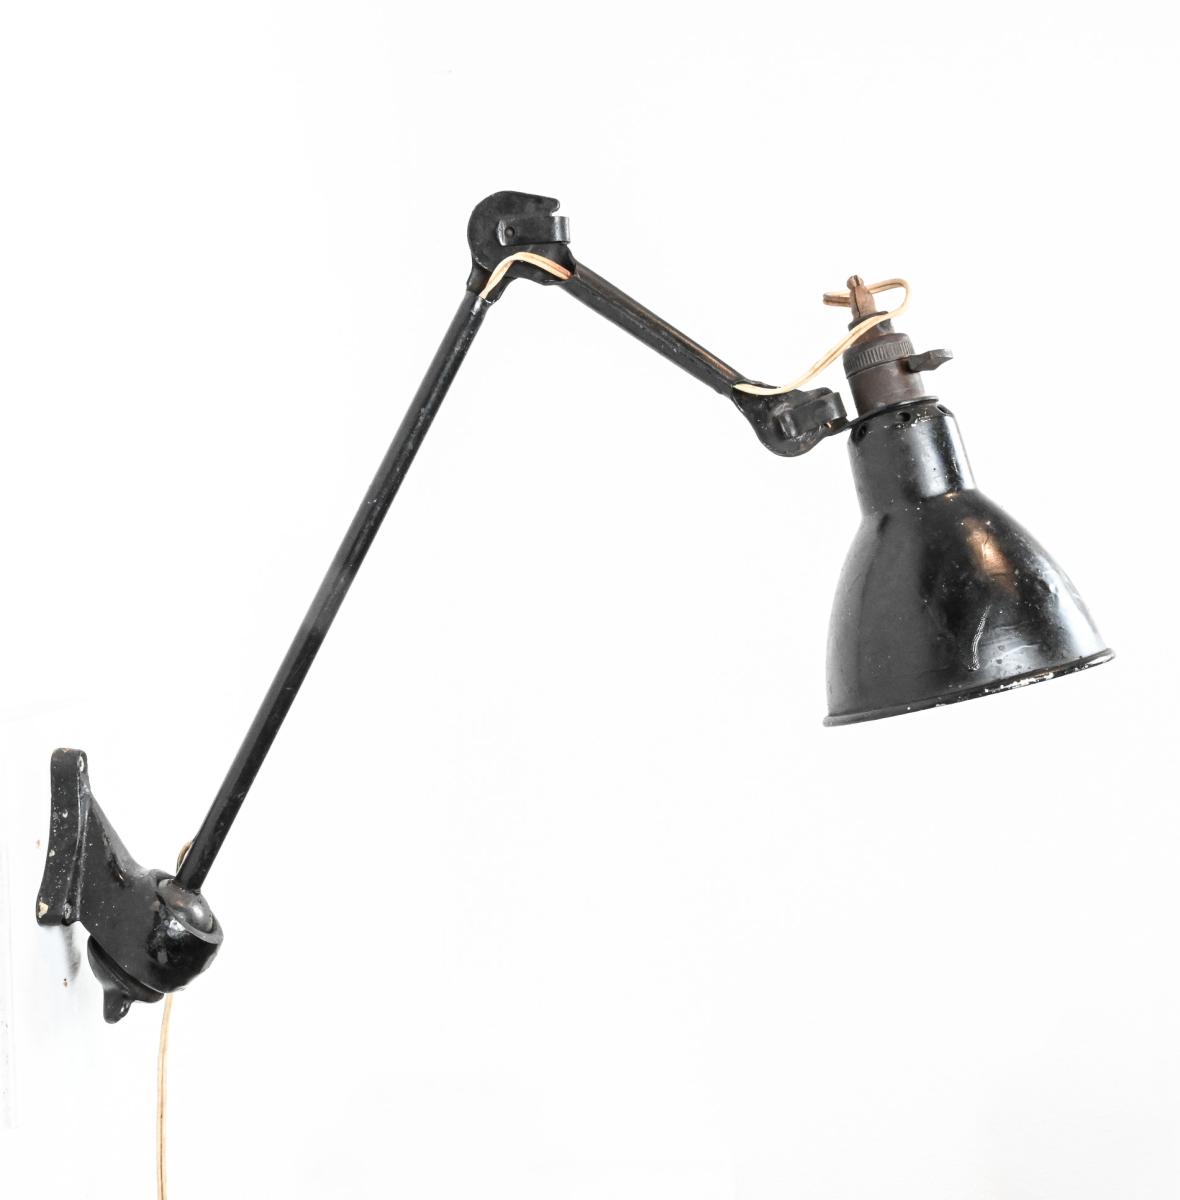 Gras Ravel 222 model adjustable wall lamp